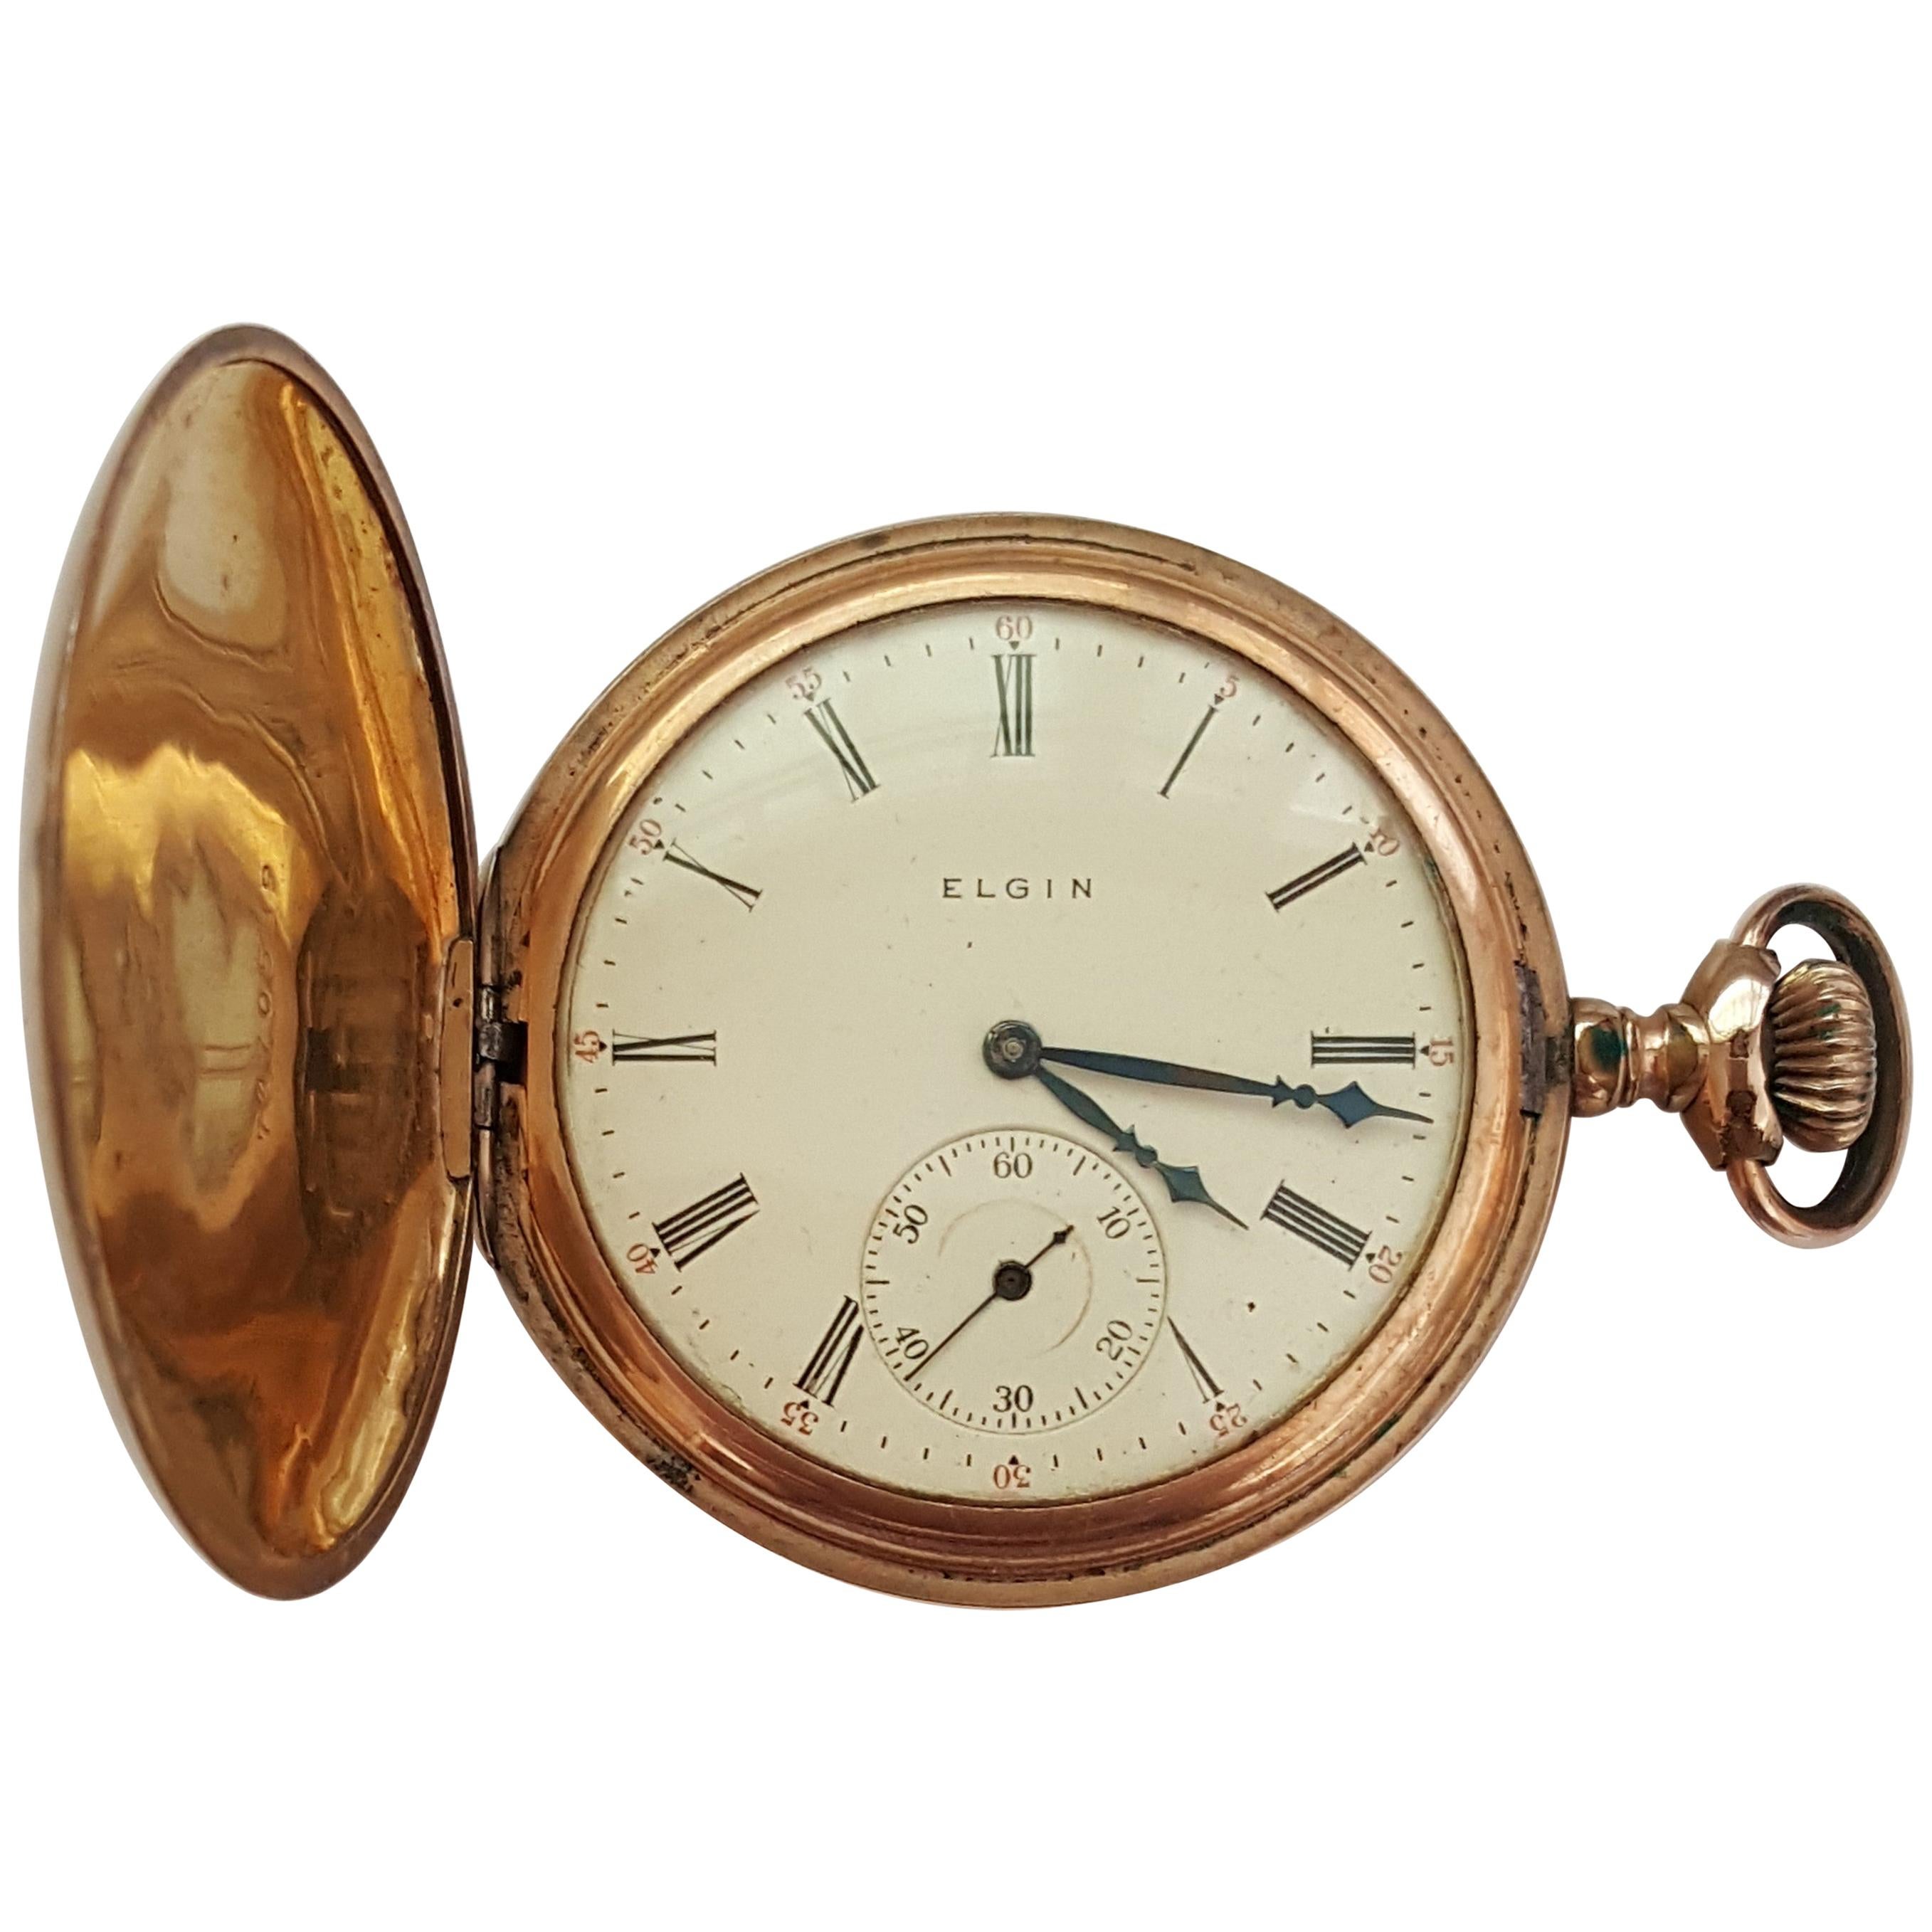 Vintage Elgin Gold-Plated Pocket Watch, Year 1907, Floral Bird Case, 7 Jewel